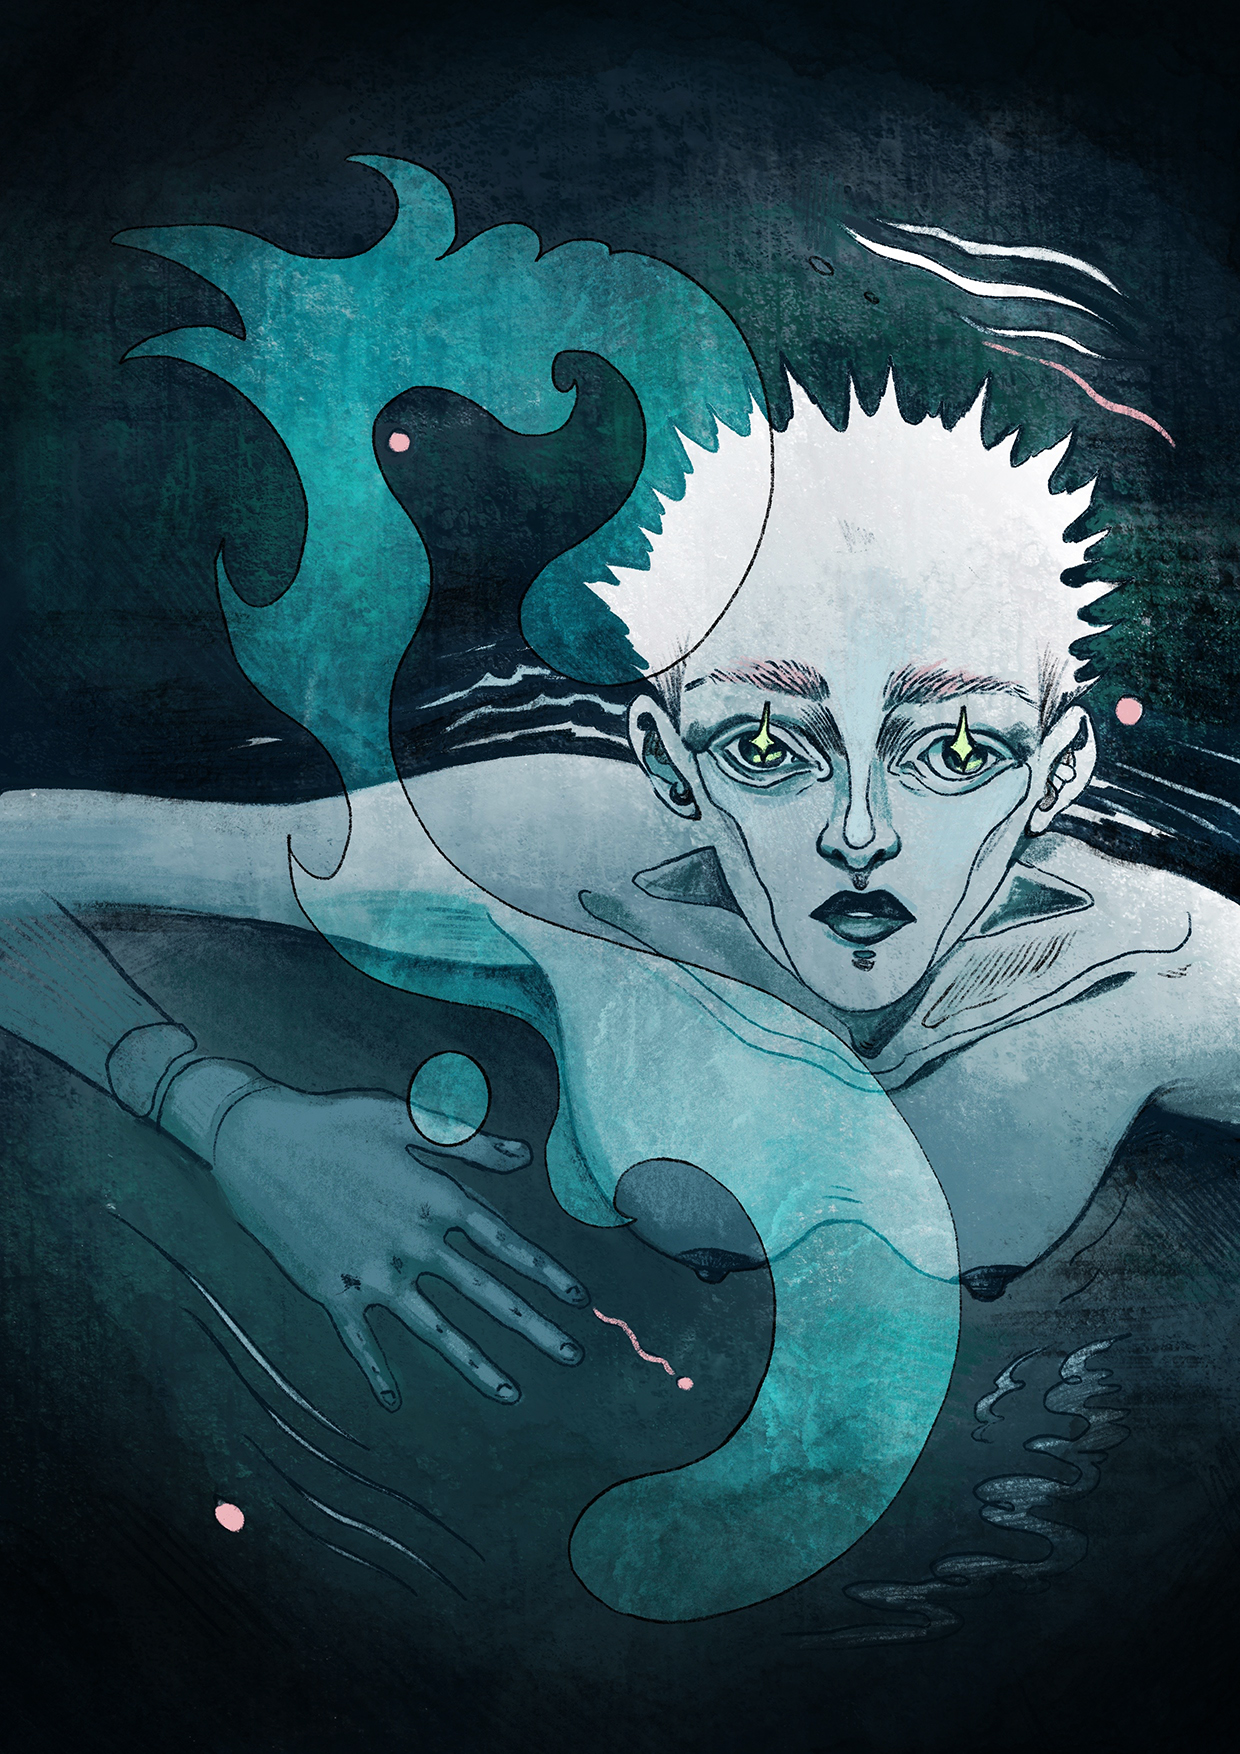 "Sinking", illustration by Sara Buccellato